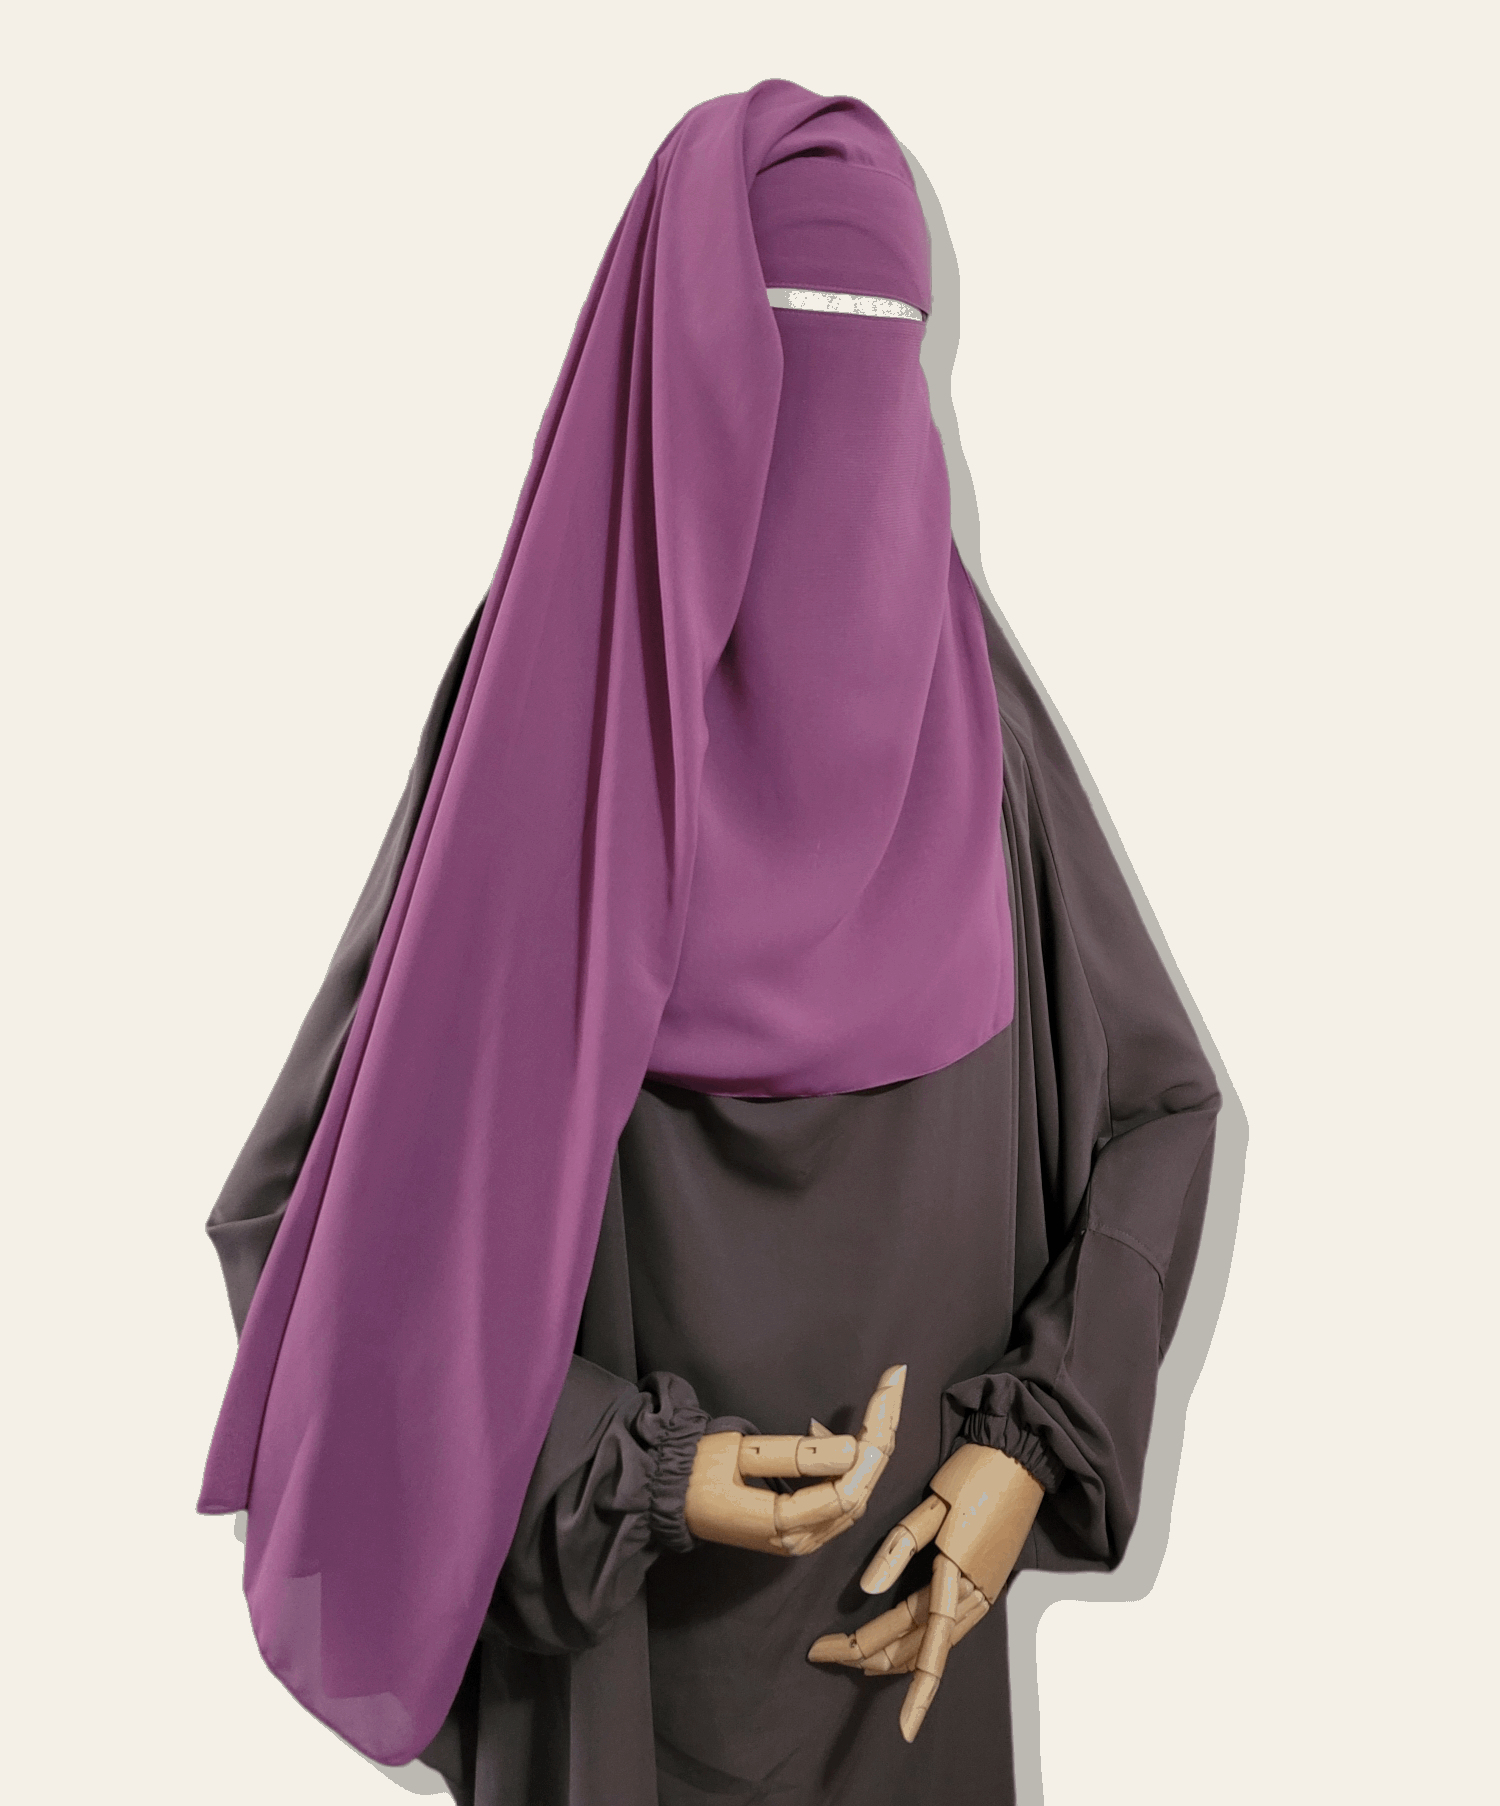 Double layer niqab - Rumaysa Fashionz 